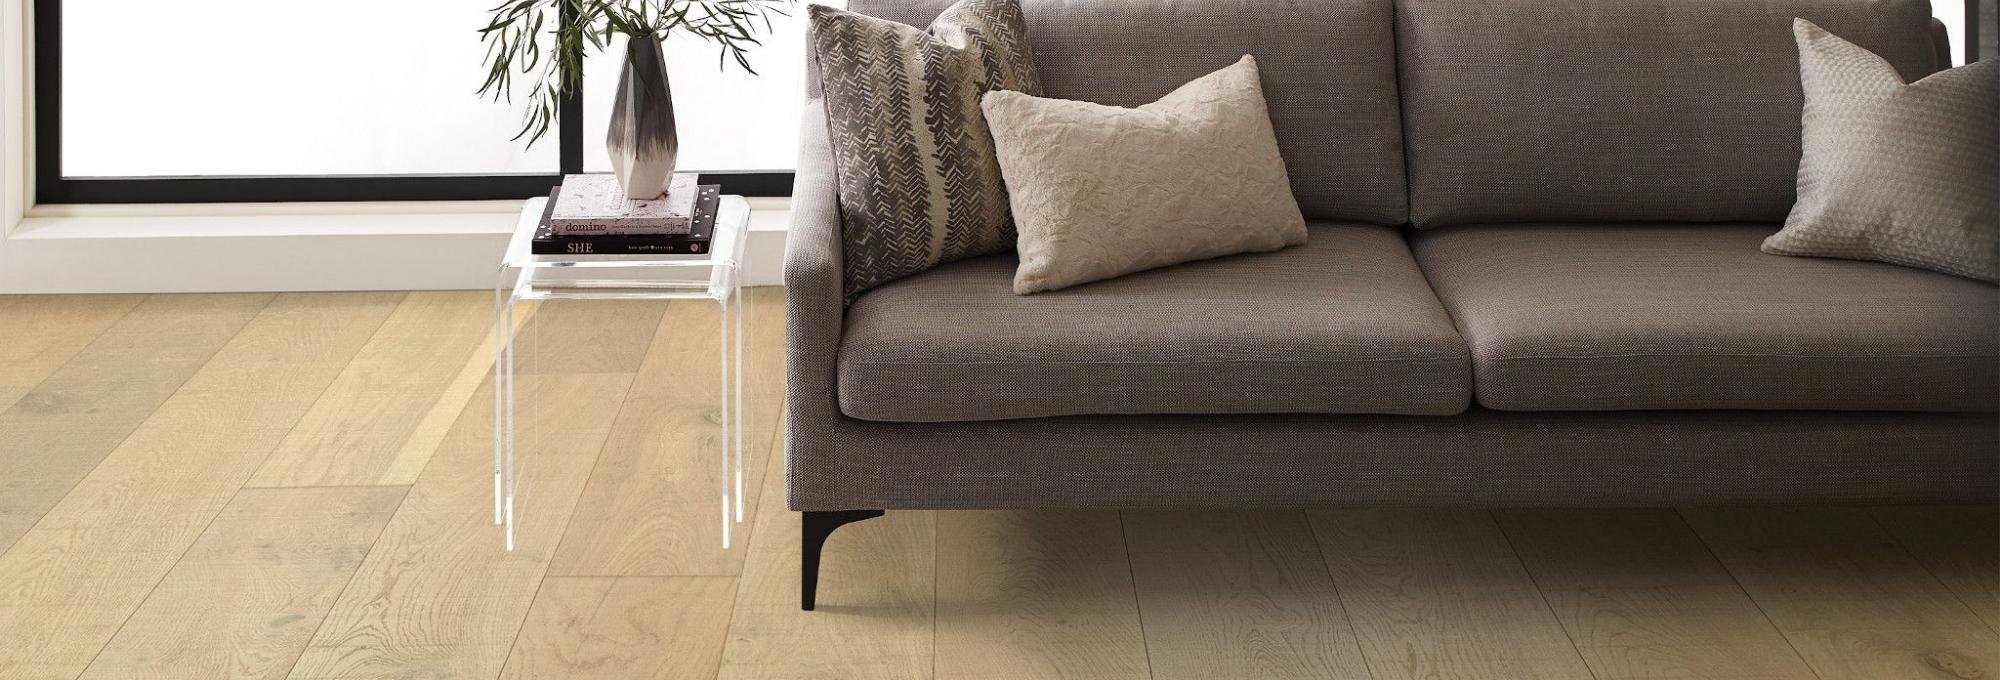 hardwood floor living room - J&J Carpets LLC in GA